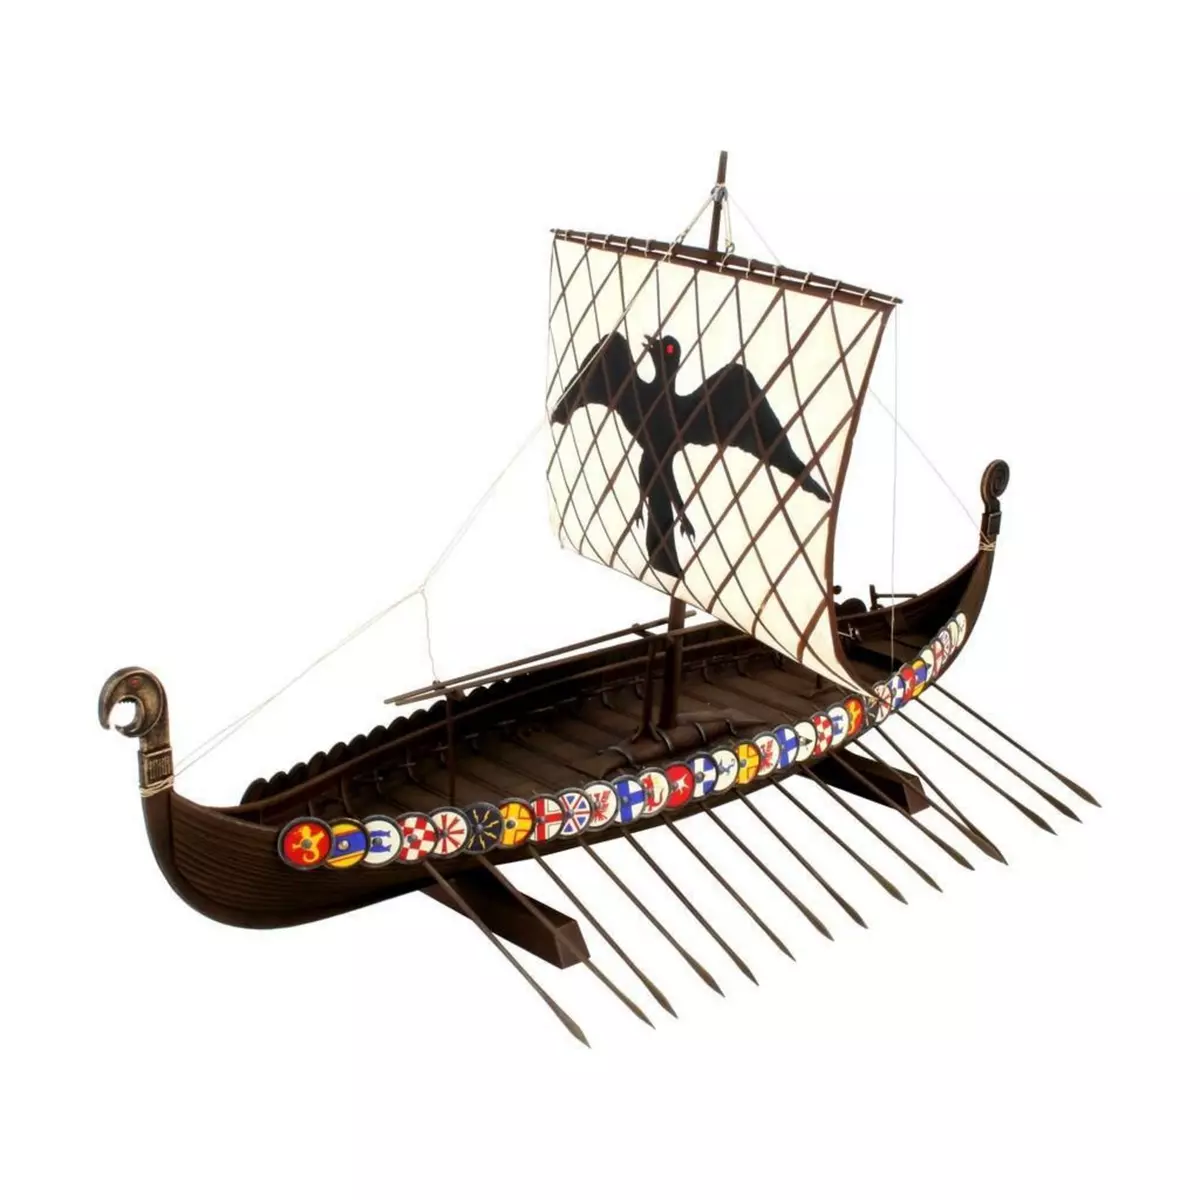 Revell Maquette bateau : Viking Ship